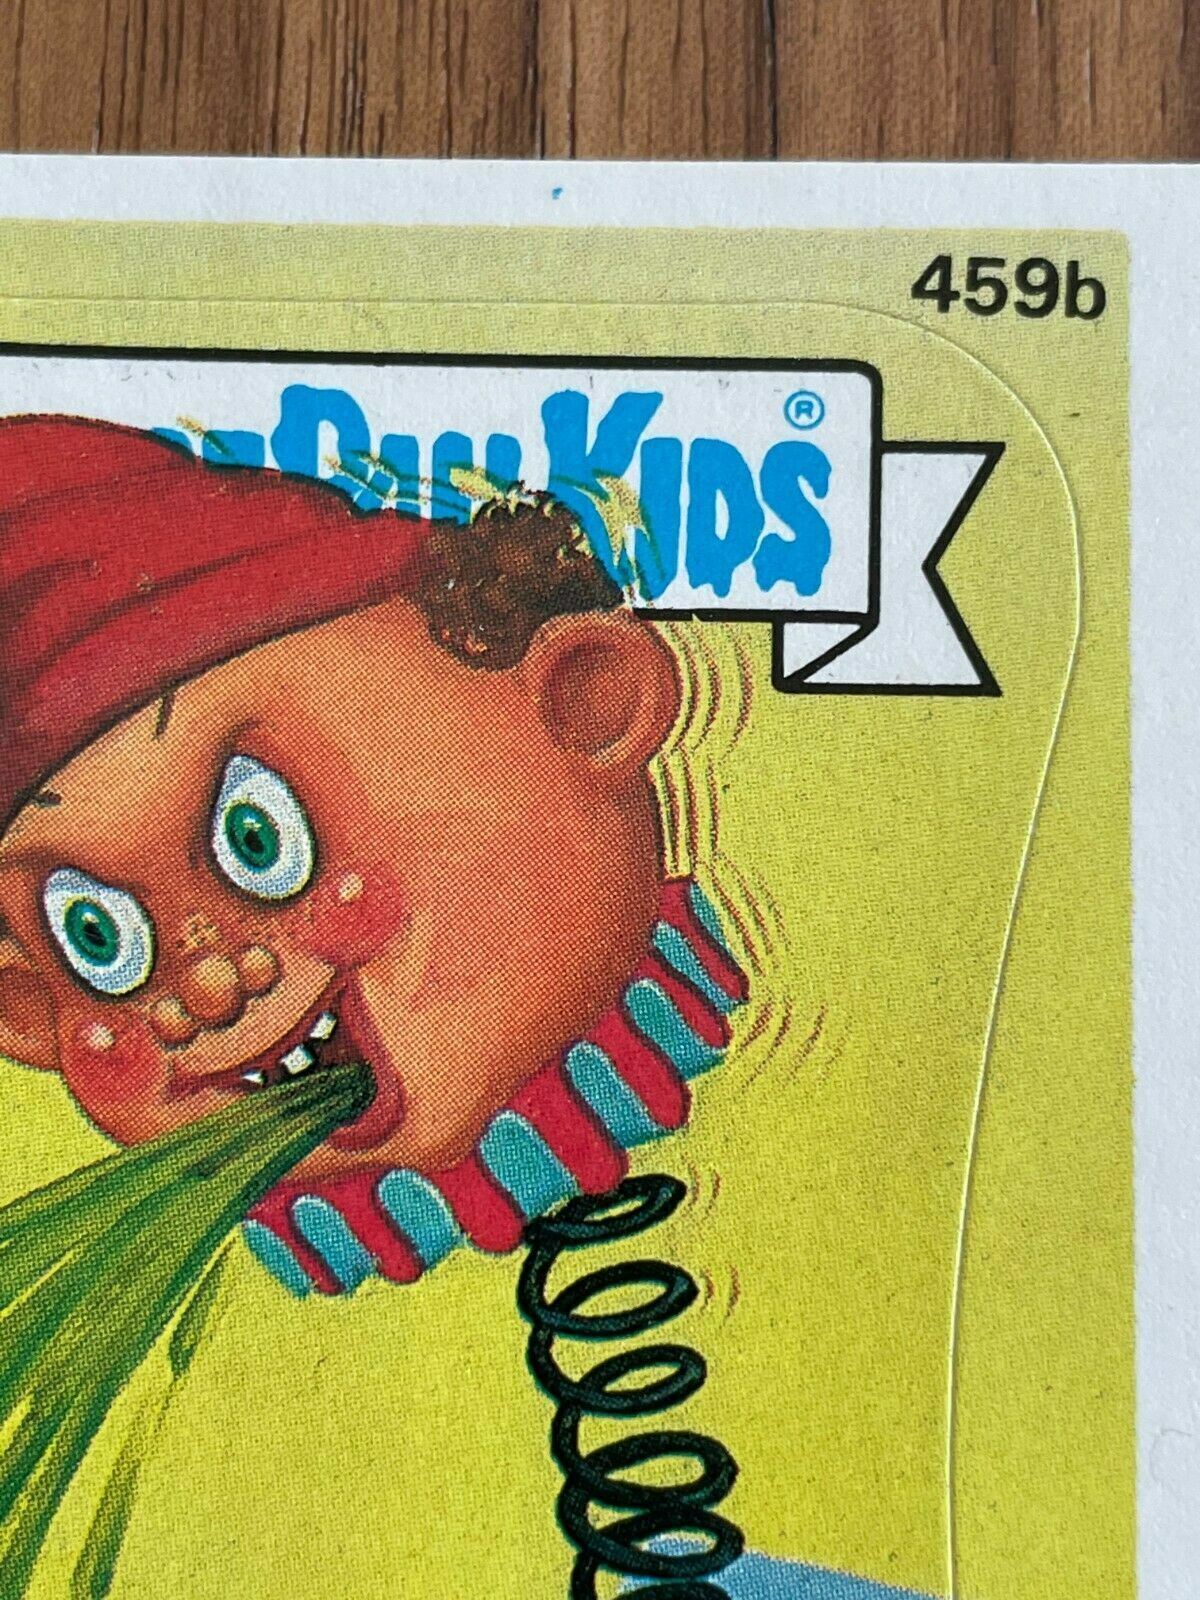 Topps Garbage Pail Kids 459b JUICY JULES Card LIGHT YELLOW LINE SPLOTCH ERROR